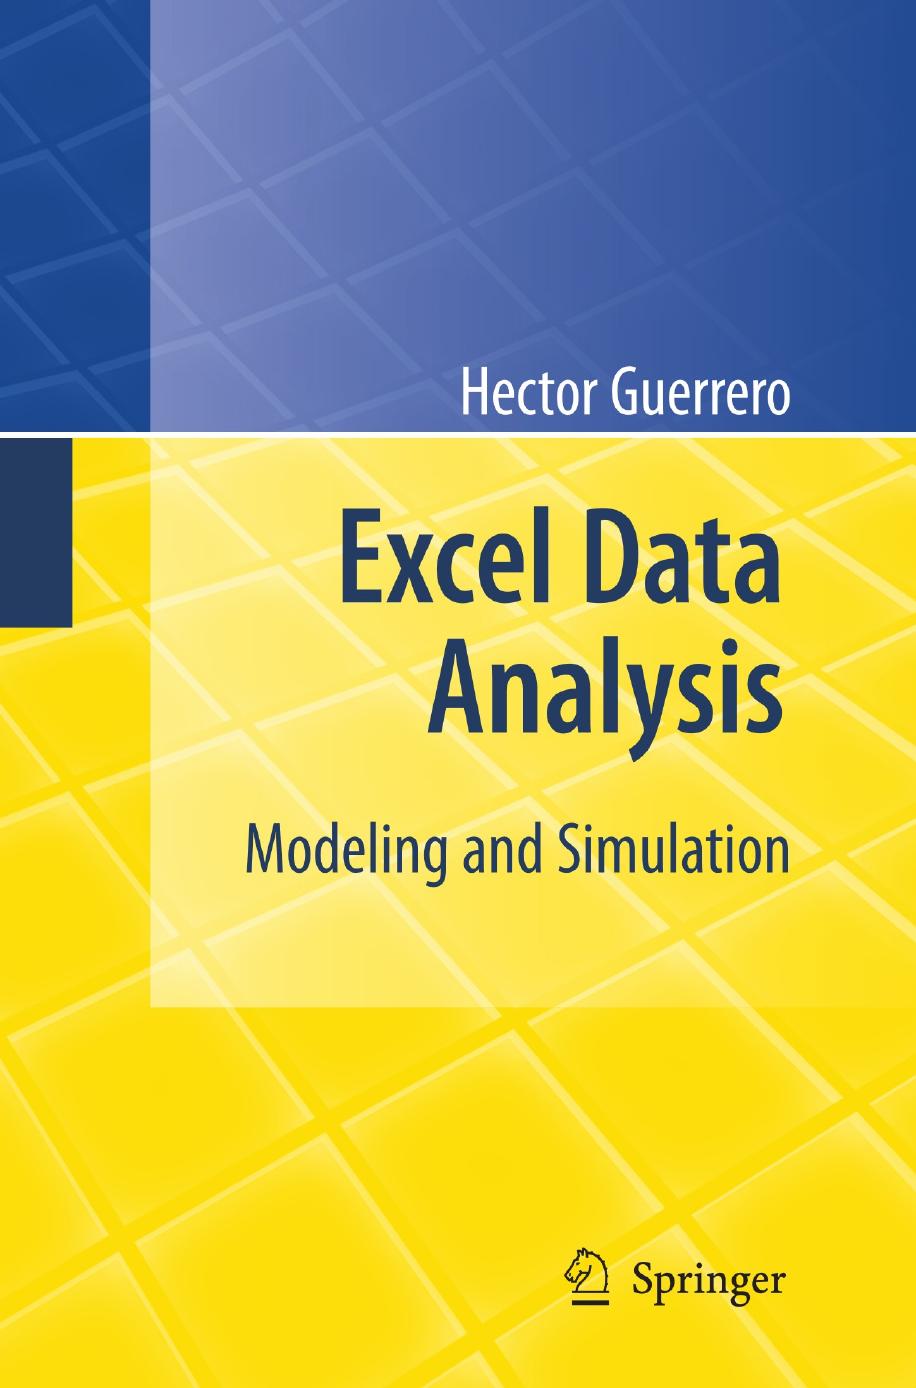 Excel data analysis 2015